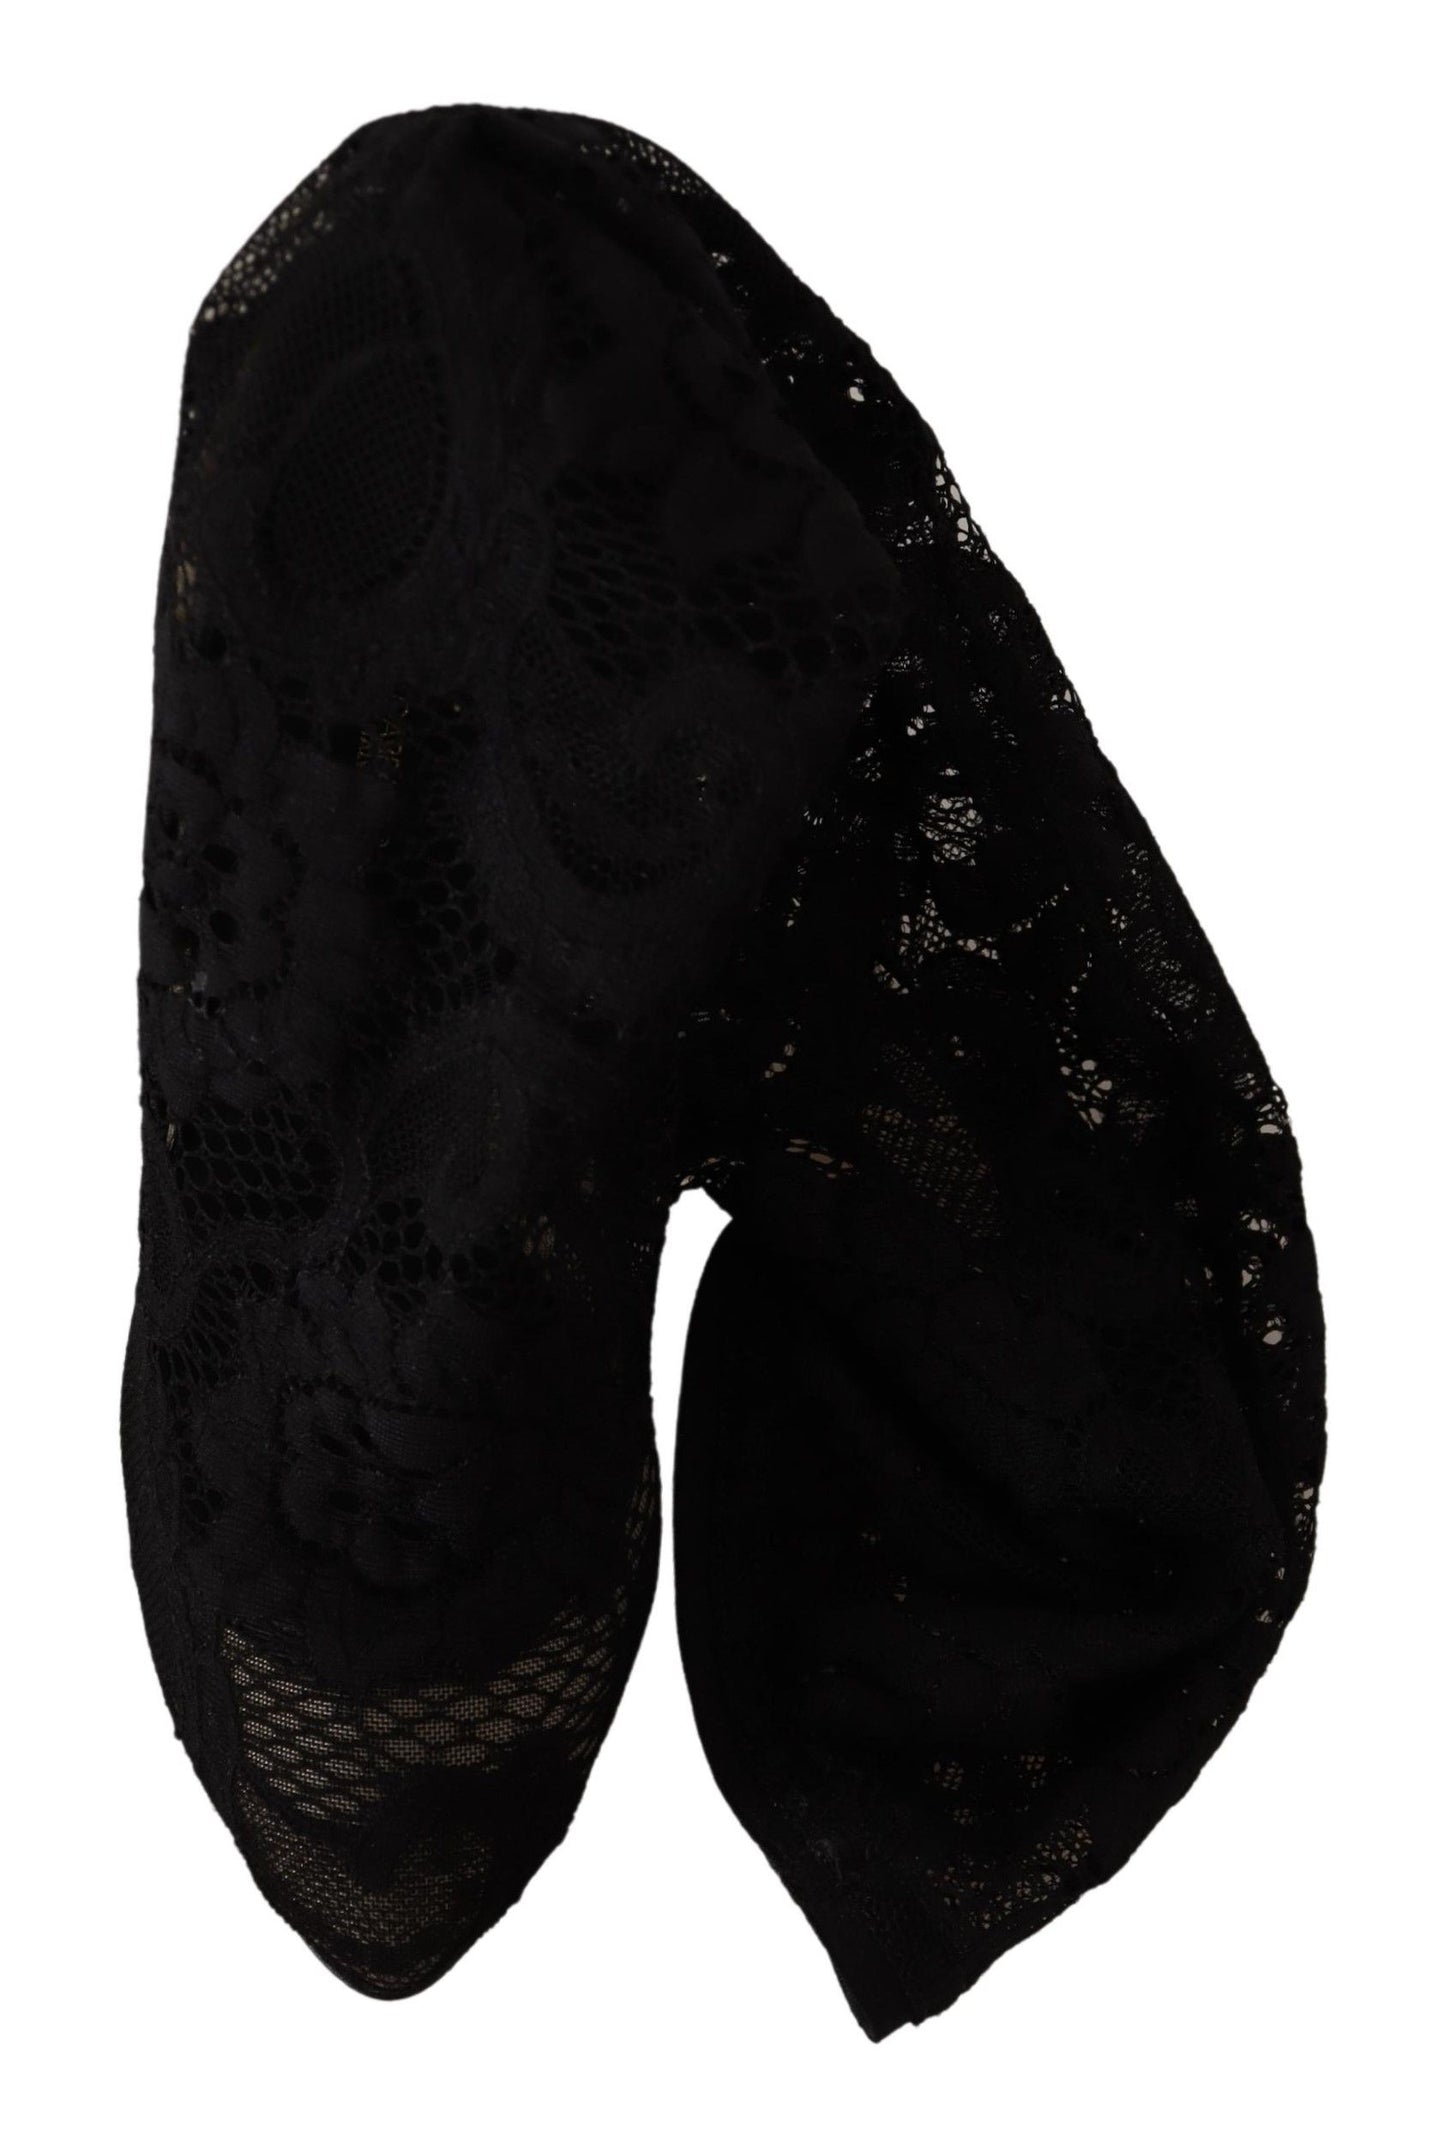 Elegant Stretch Sock Boots in Sleek Black